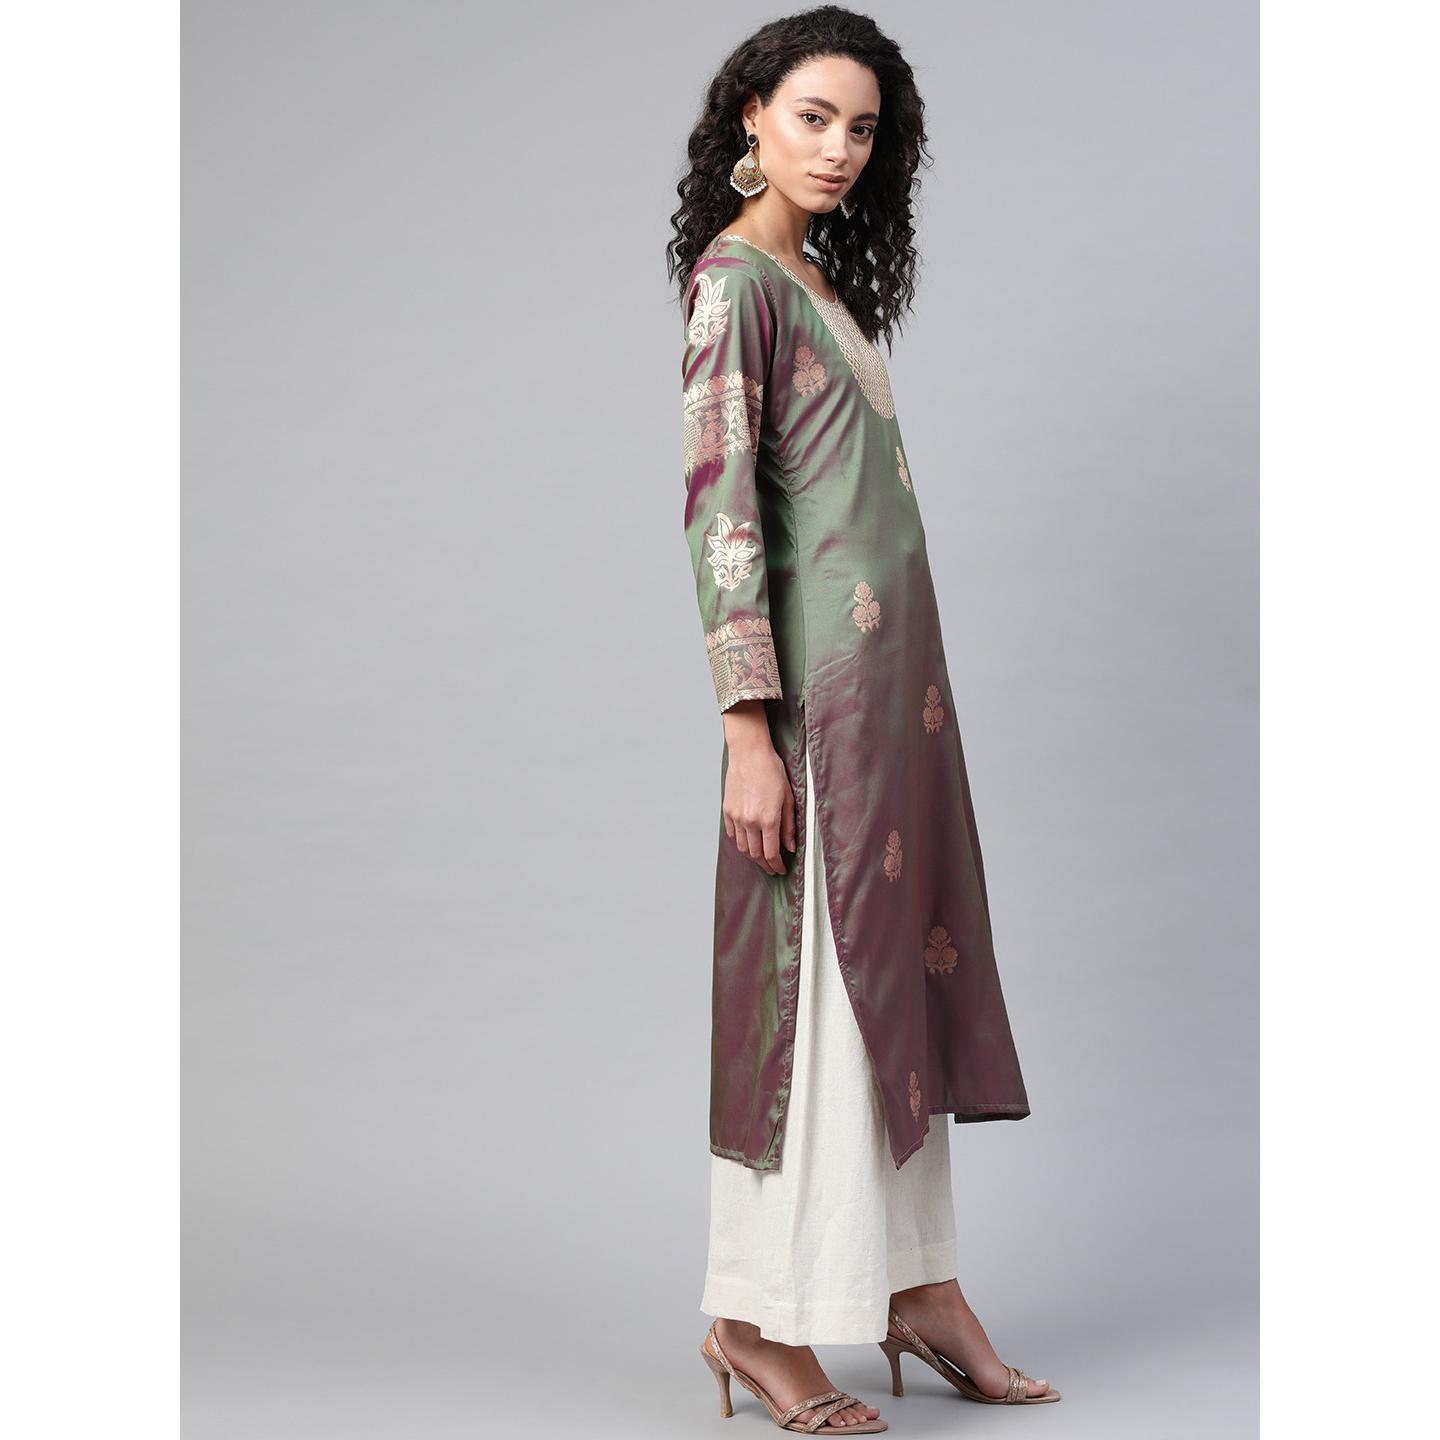 Blissta - Women's Olive Colored Banarasi Silk Straight Kurti - Peachmode